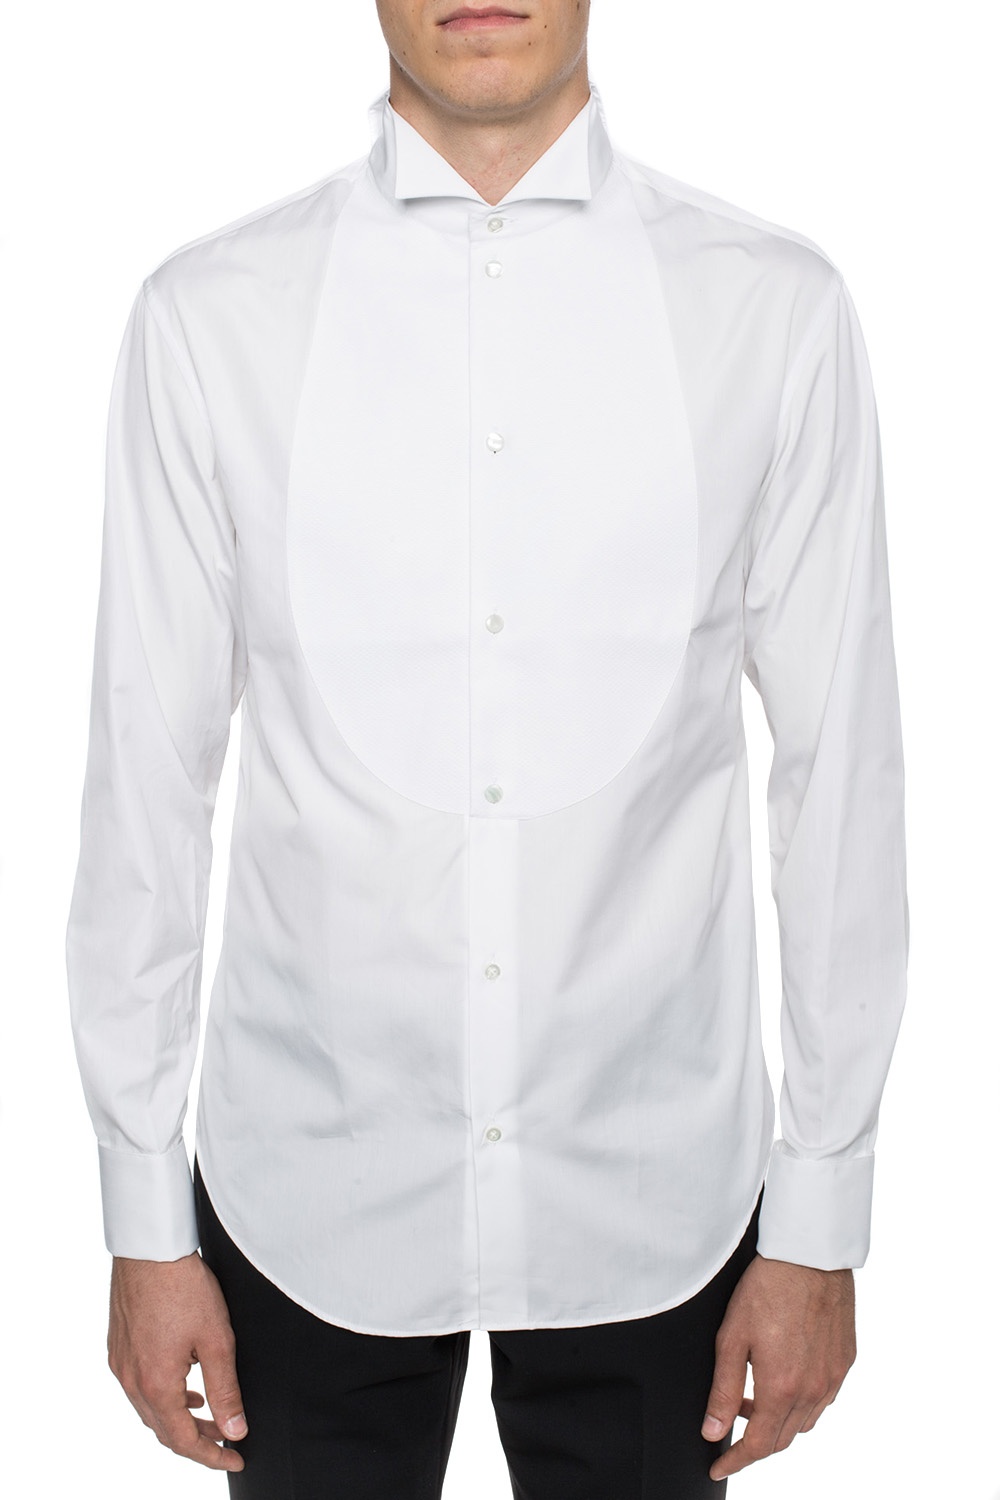 Buy > armani tuxedo shirt > in stock